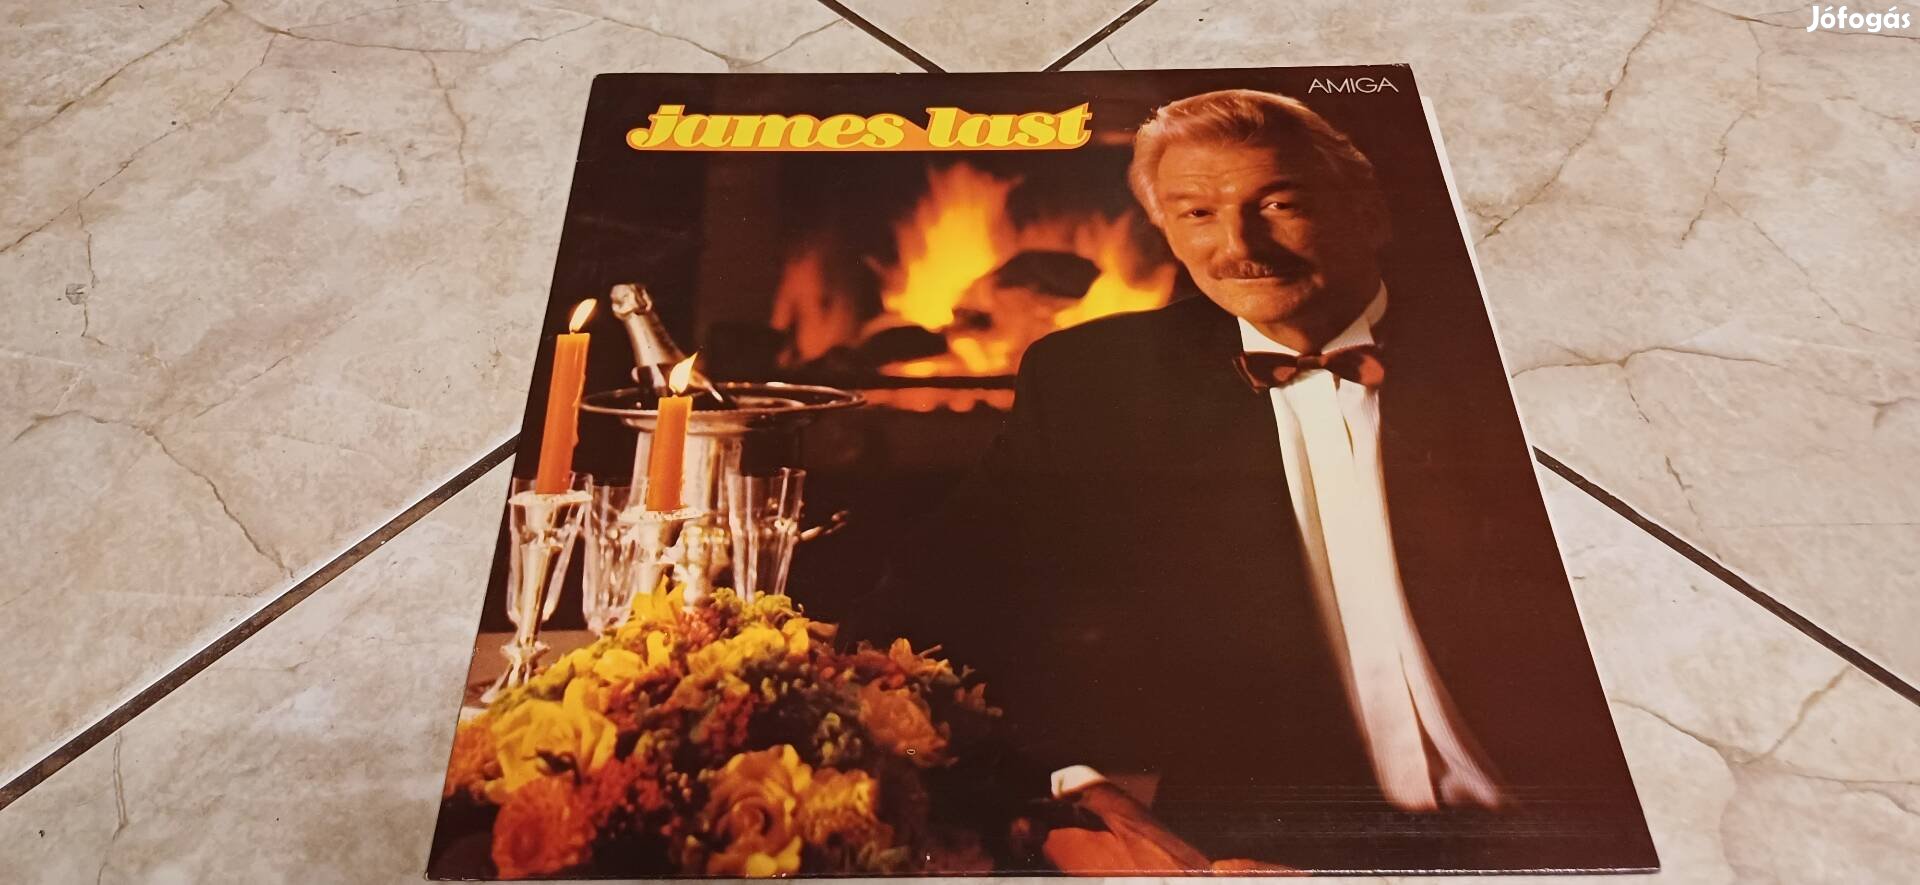 James Last bakelit lemez